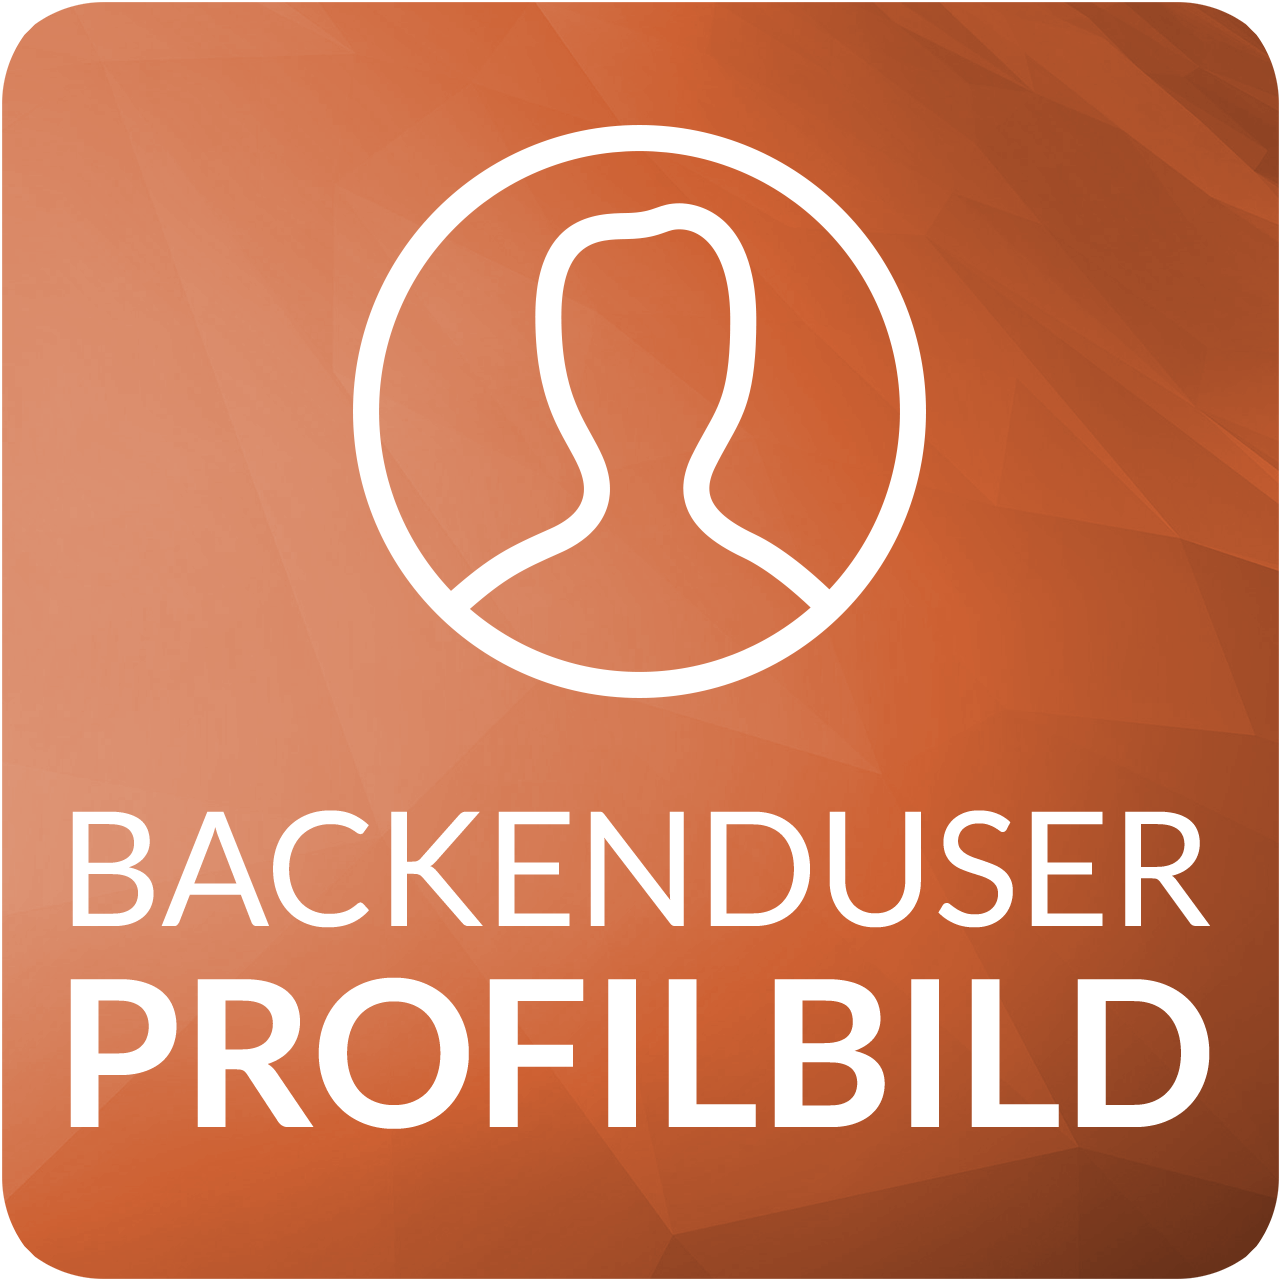 Backend-User Profilbild